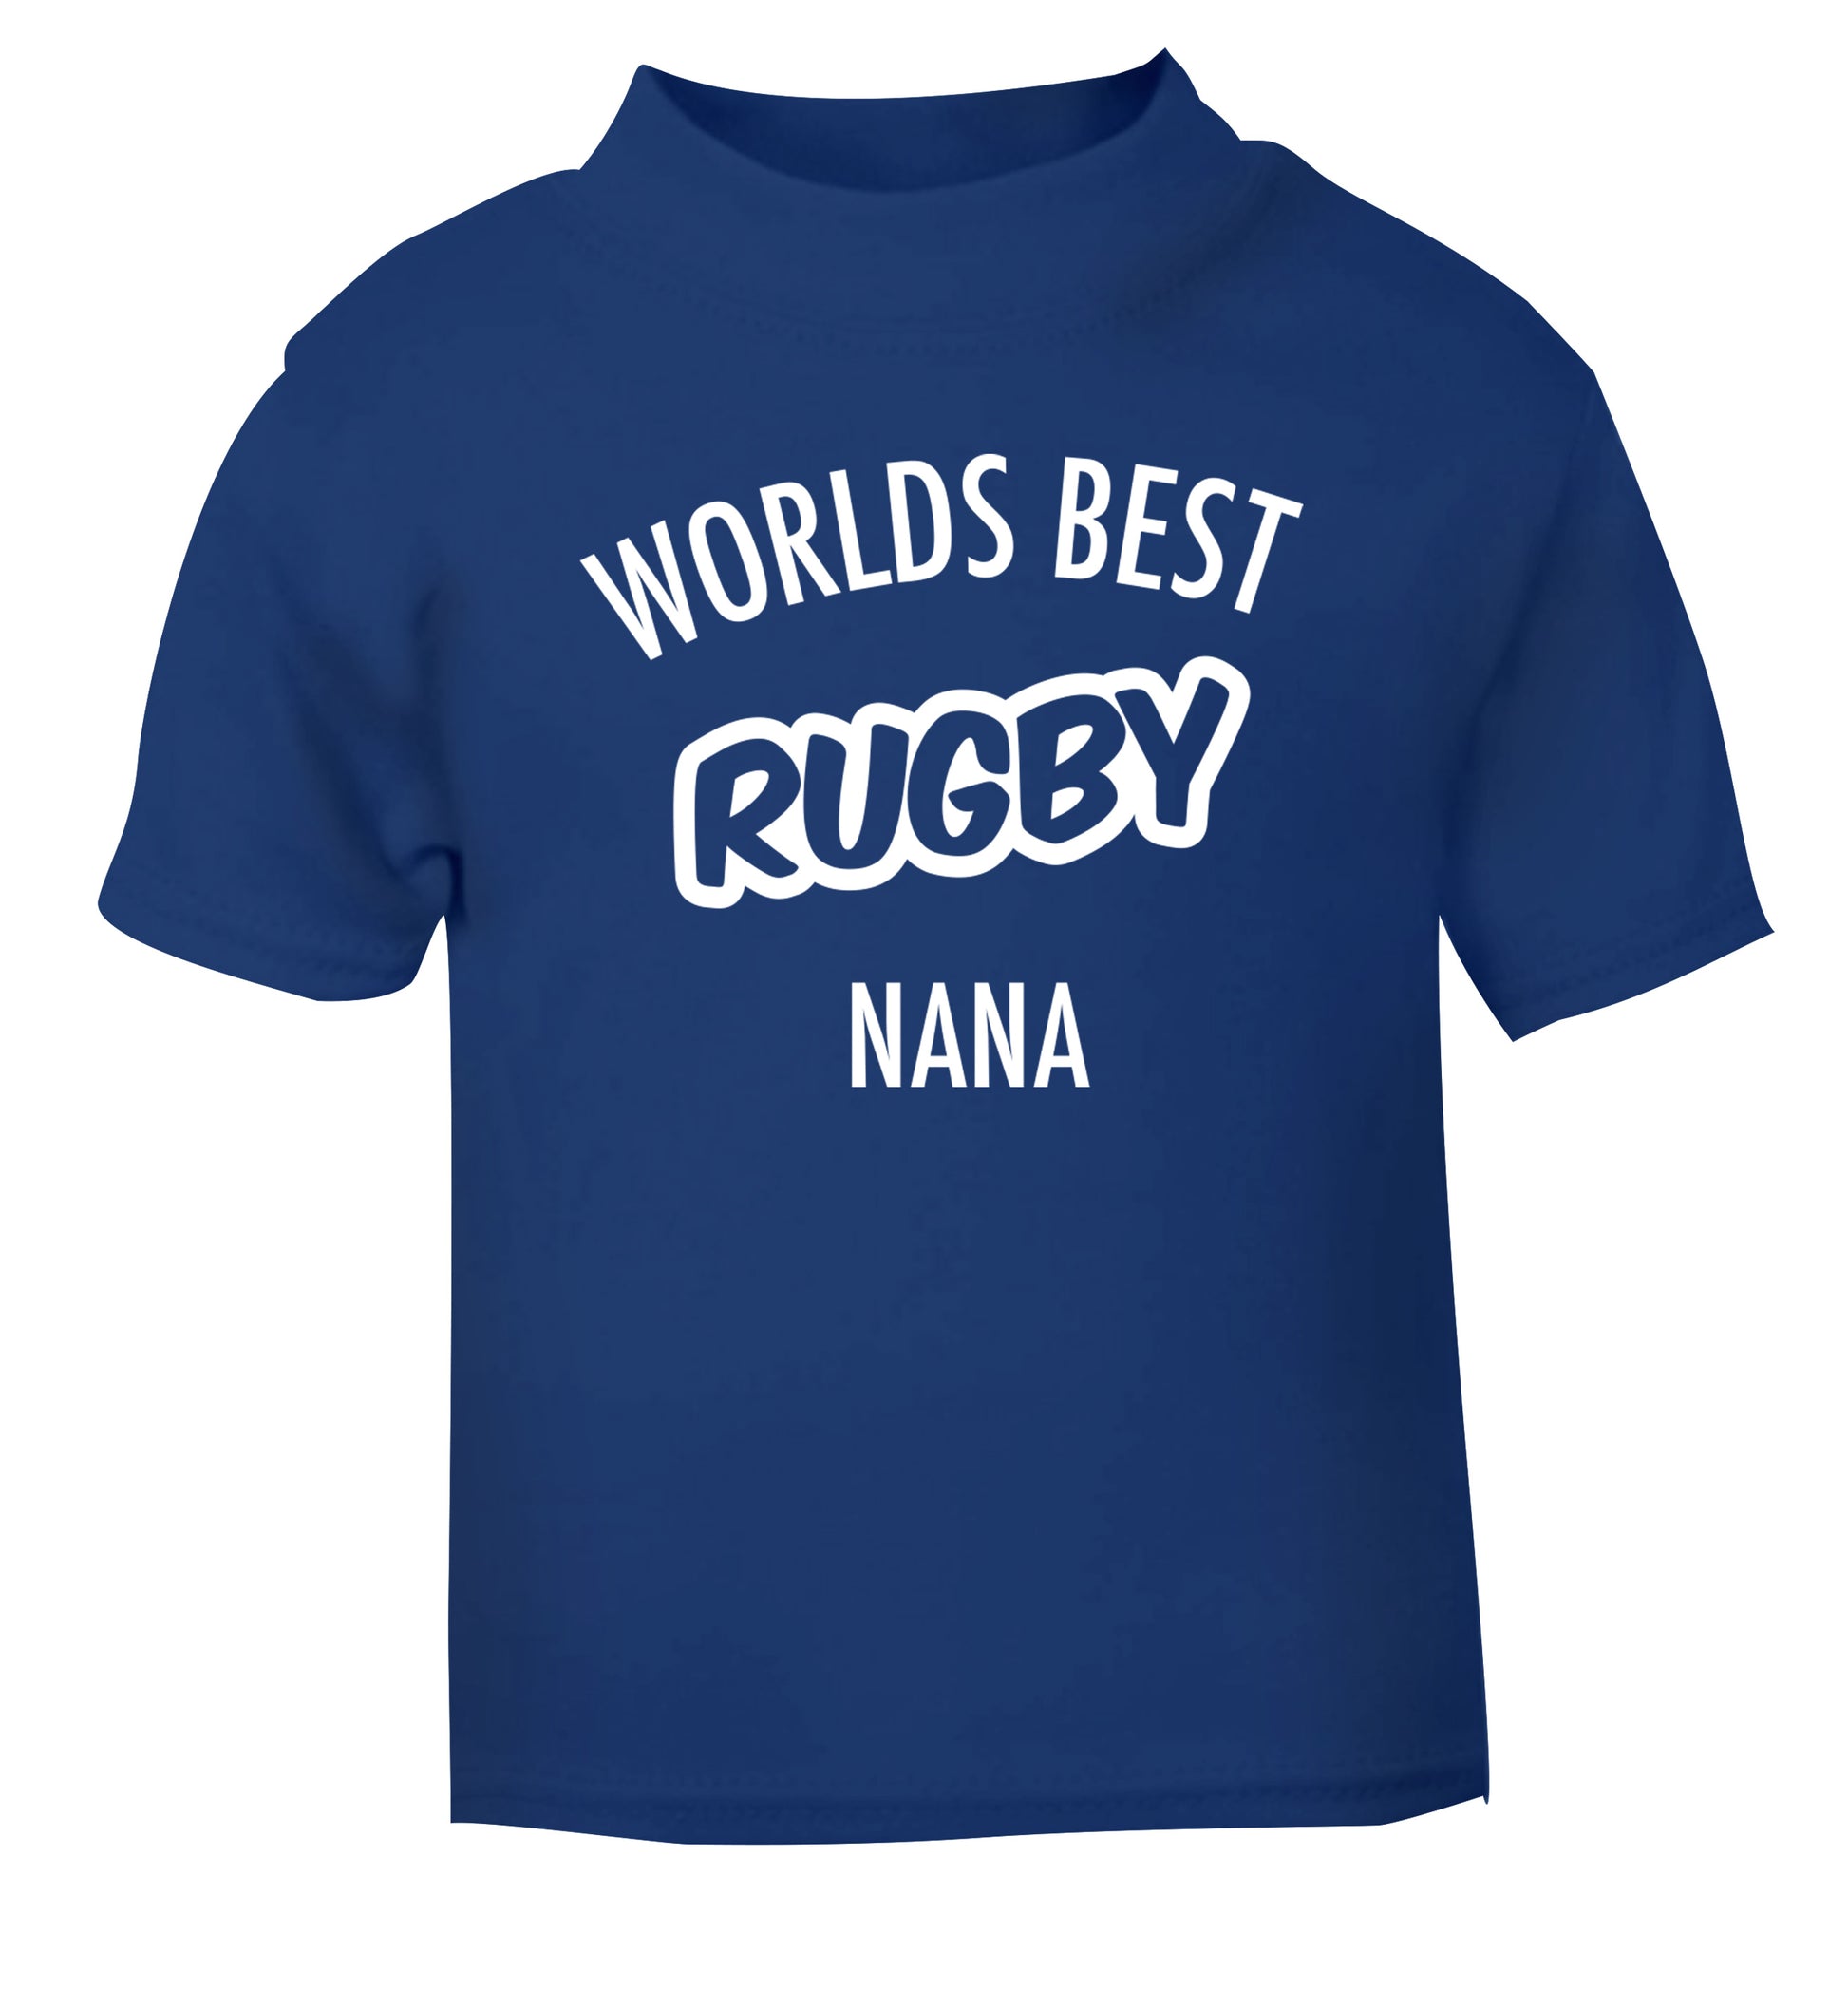 Worlds Best Rugby Grandma blue Baby Toddler Tshirt 2 Years